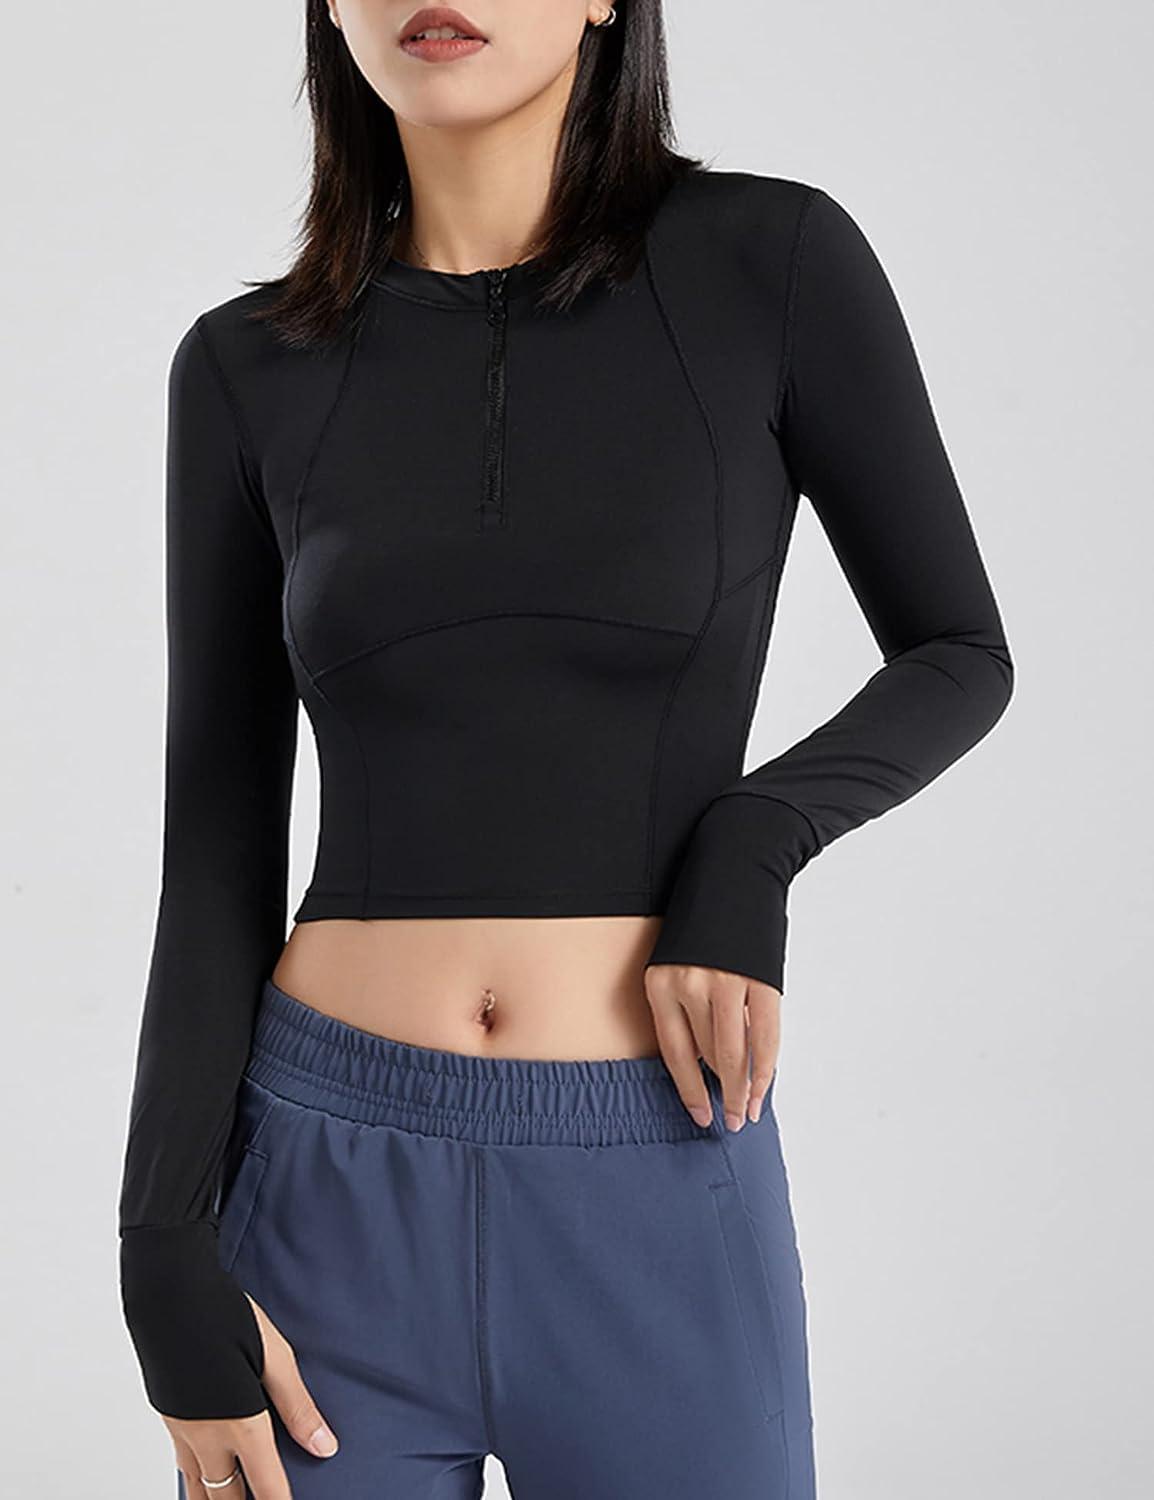 ZHENWEI Women's Cropped Athletic Jackets Half Zip Tight Workout Tops for  Women Long Sleeve Black Medium